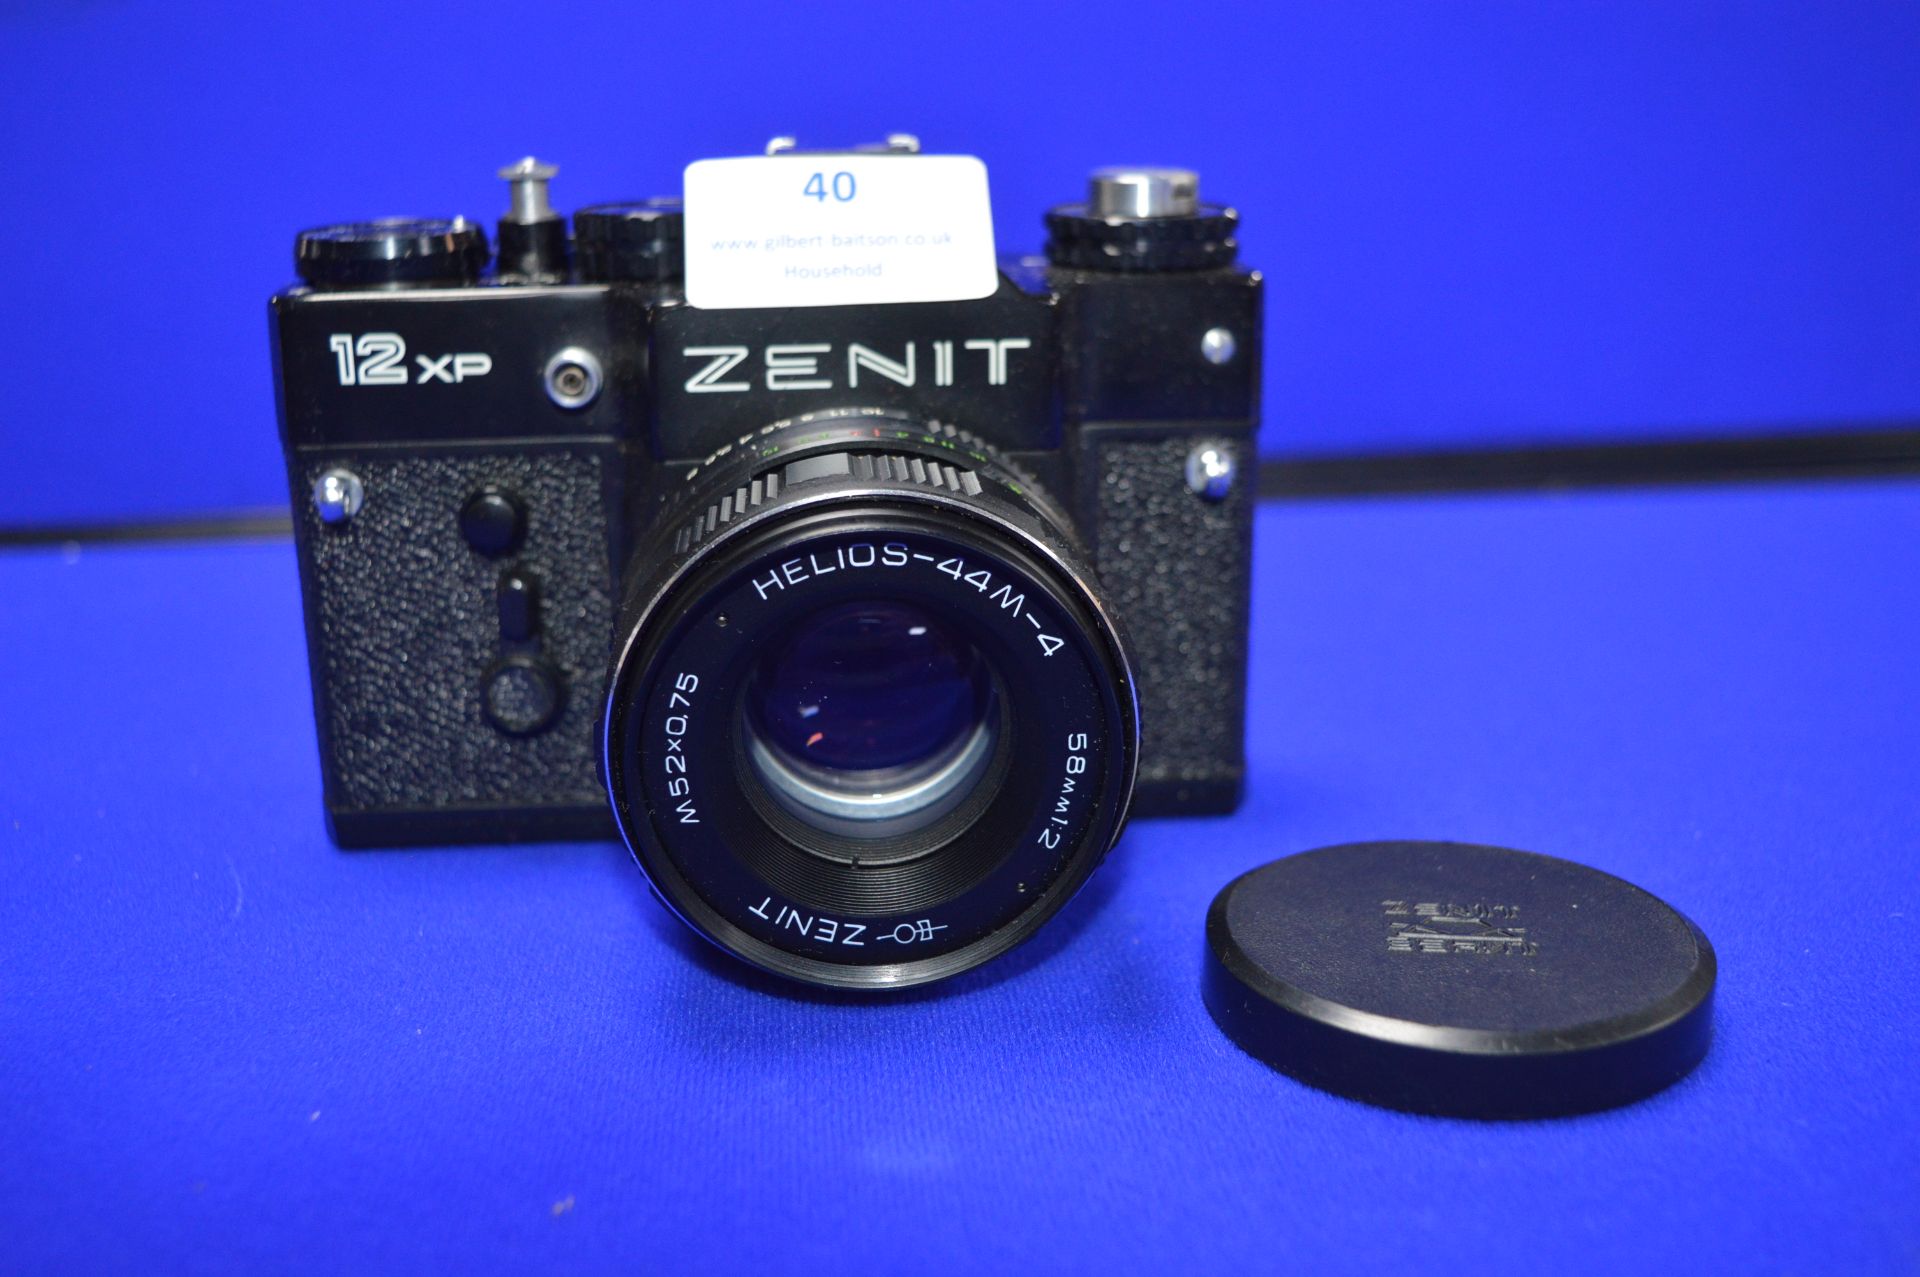 Zenit 12XP SLR Camera with Zenit Helios-44M-4 58mm 1:2 Lens